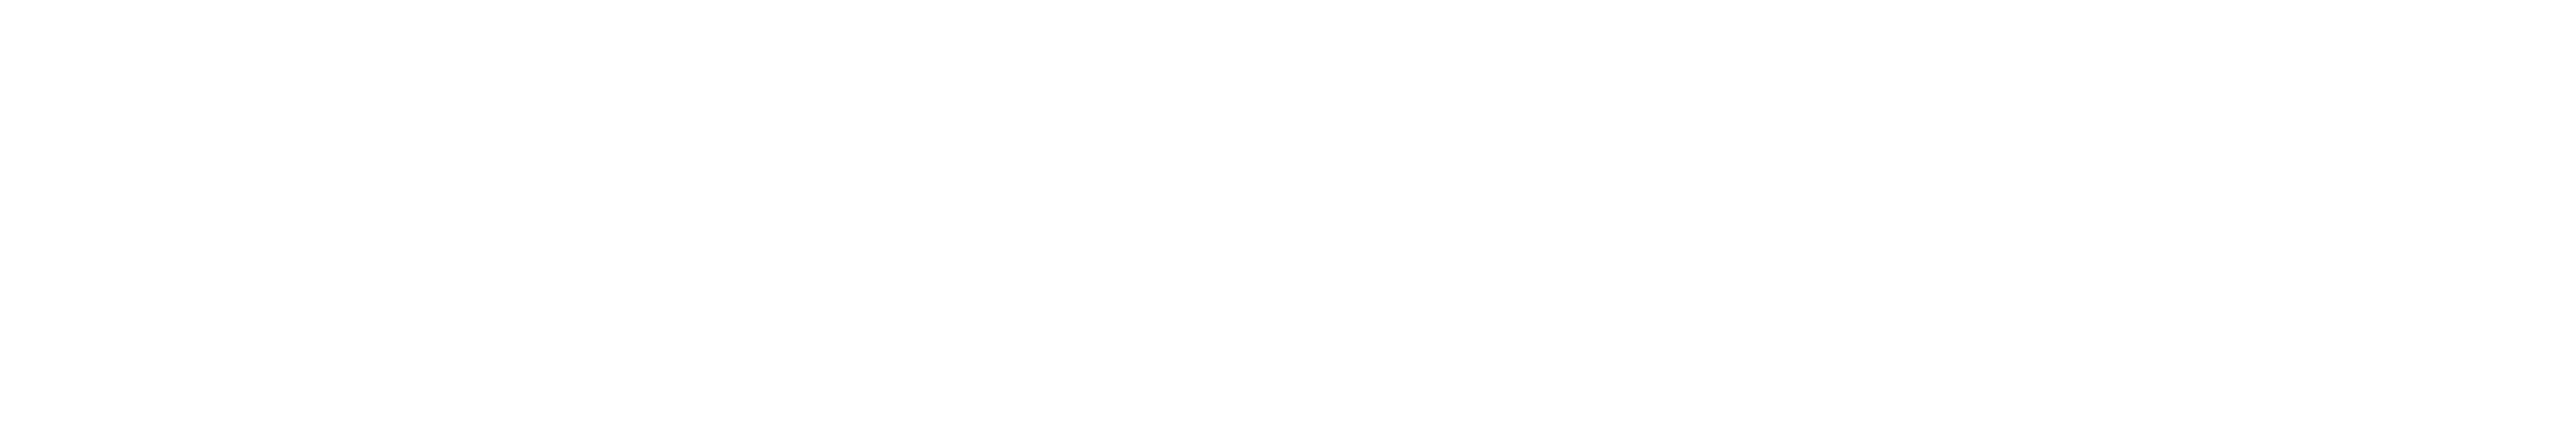 compass real estate logo, wihite lettering